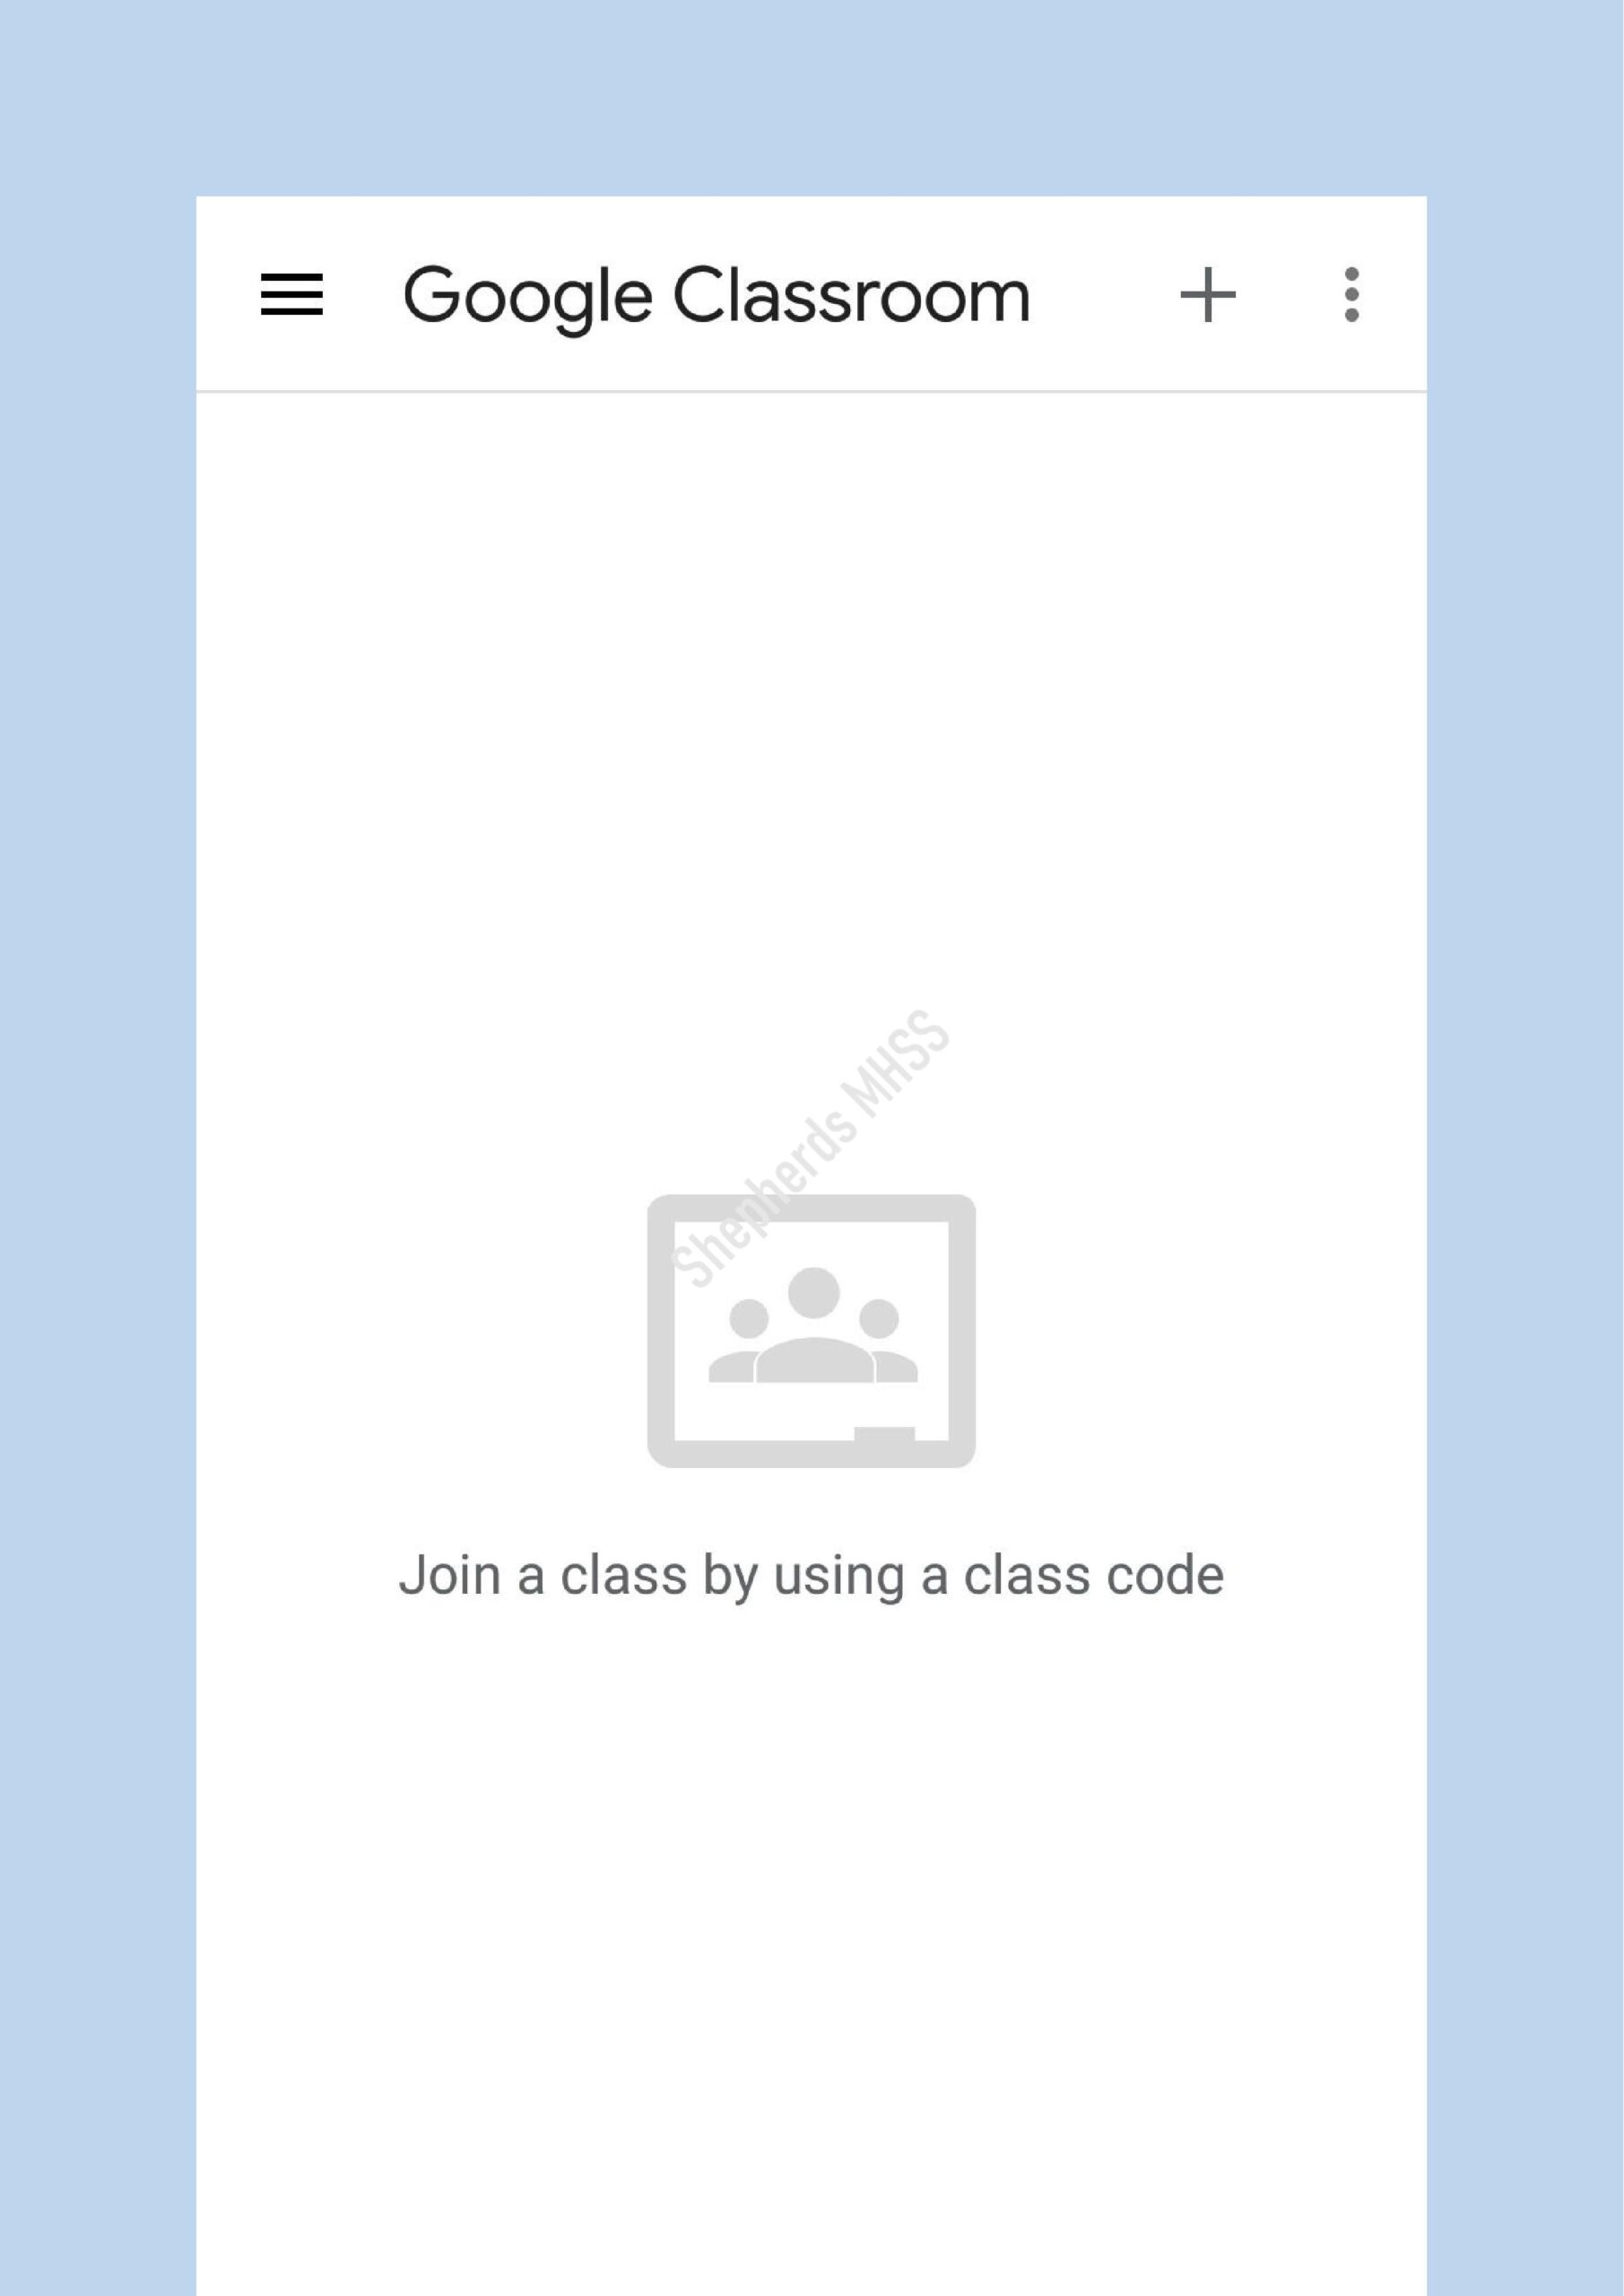 Add school account via Classroom app